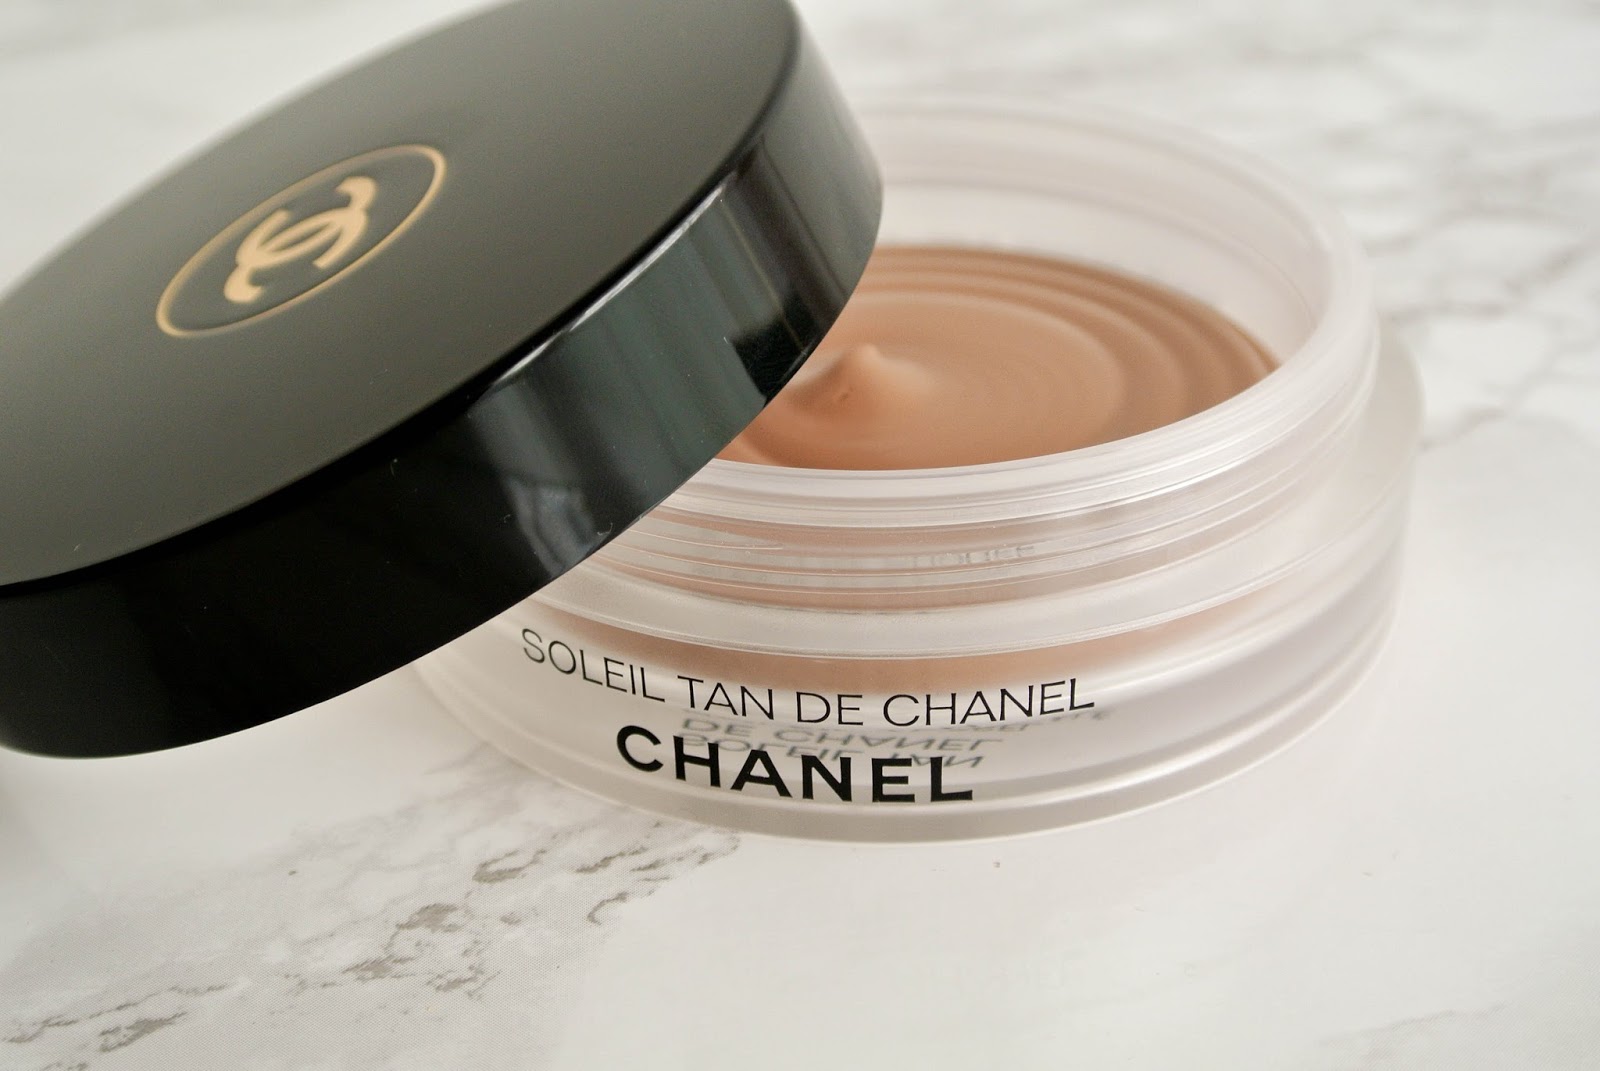 Chanel makeup recenze